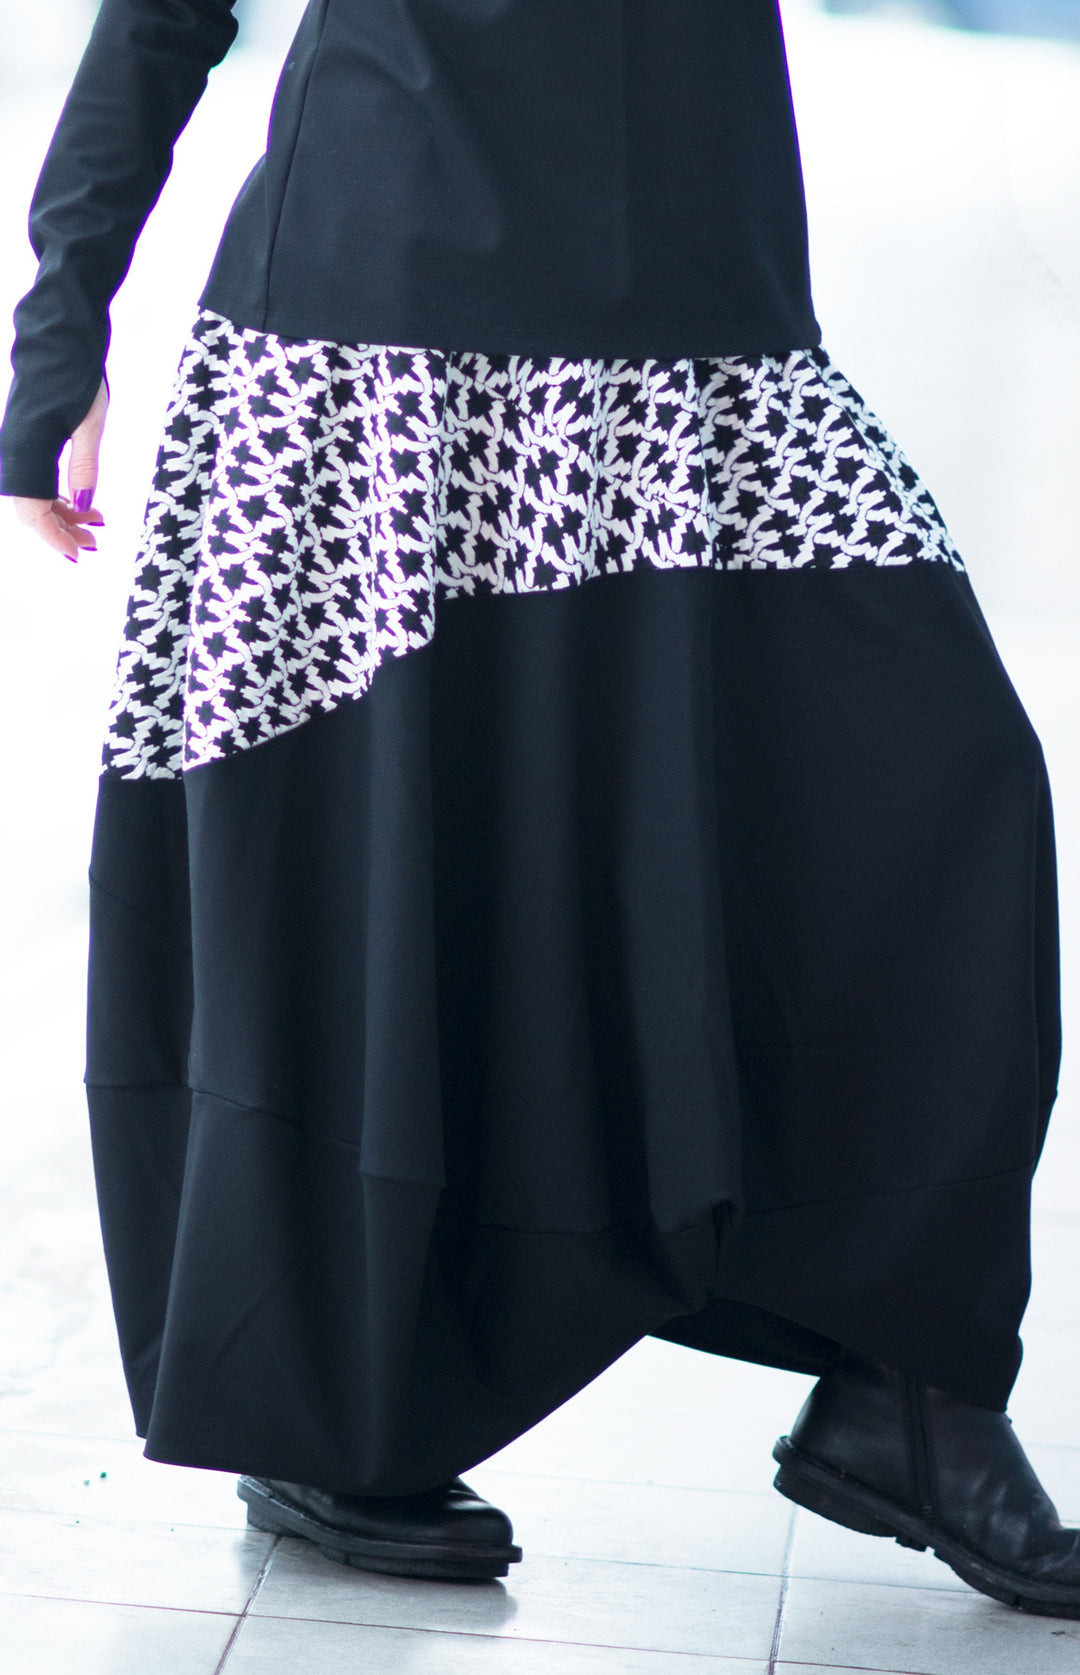 Black Shepherd's Plaid Cotton Skirt and Top